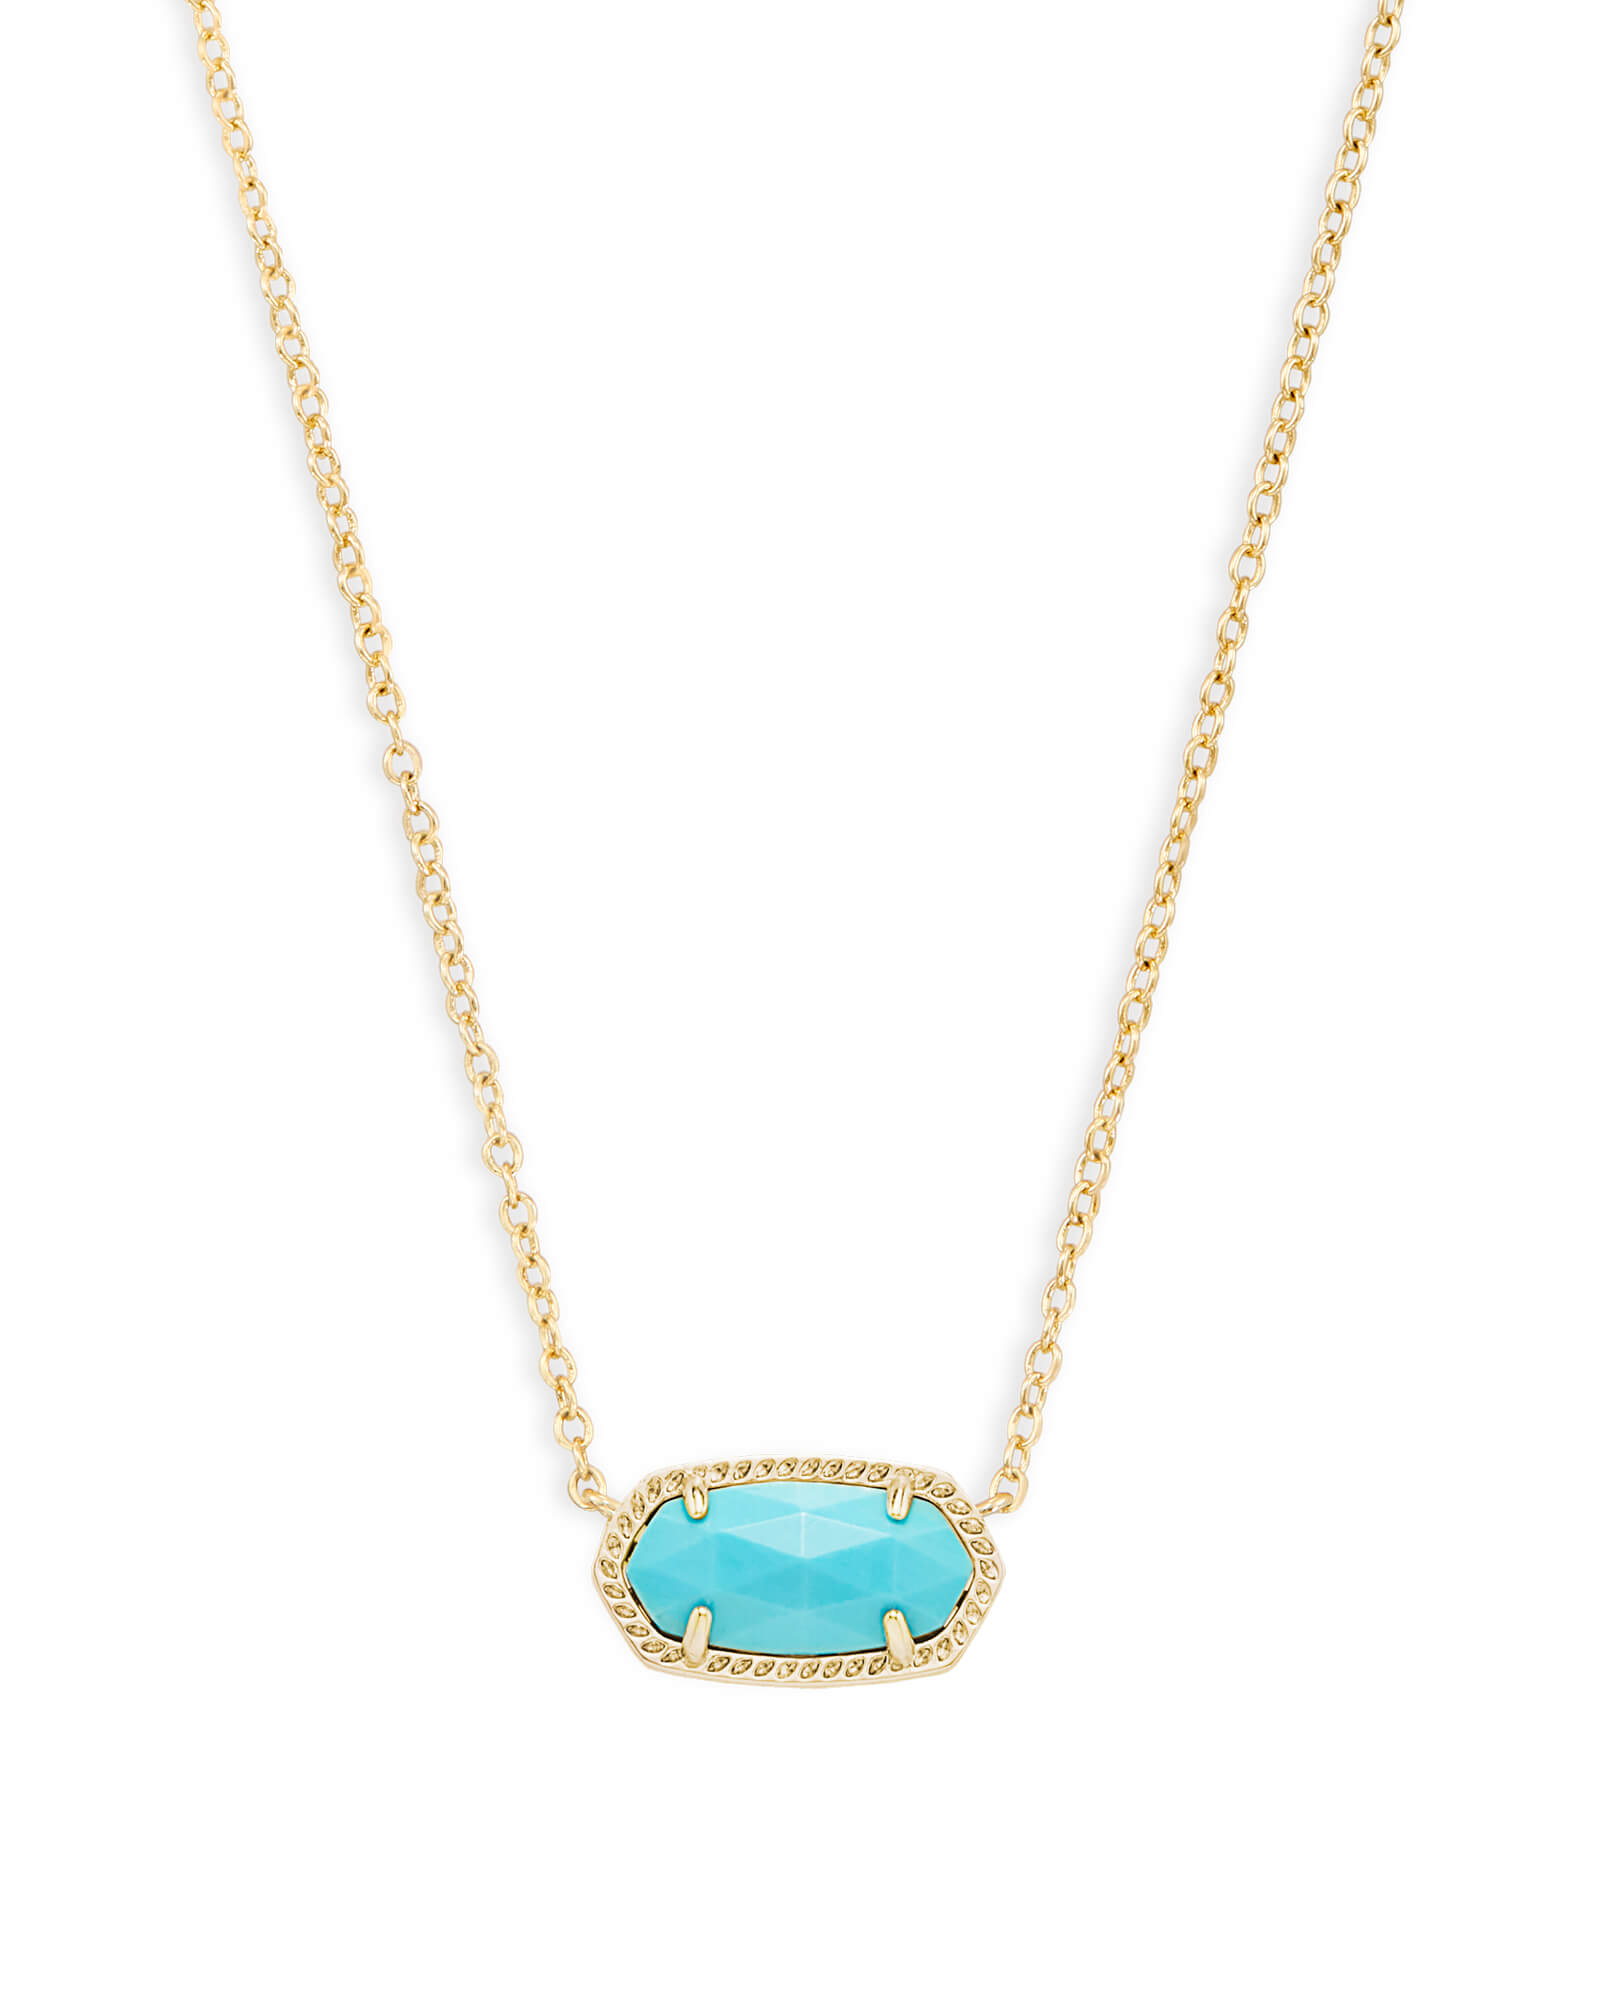 Elisa Gold Pendant Necklace in Blue Turquoise | Kendra Scott